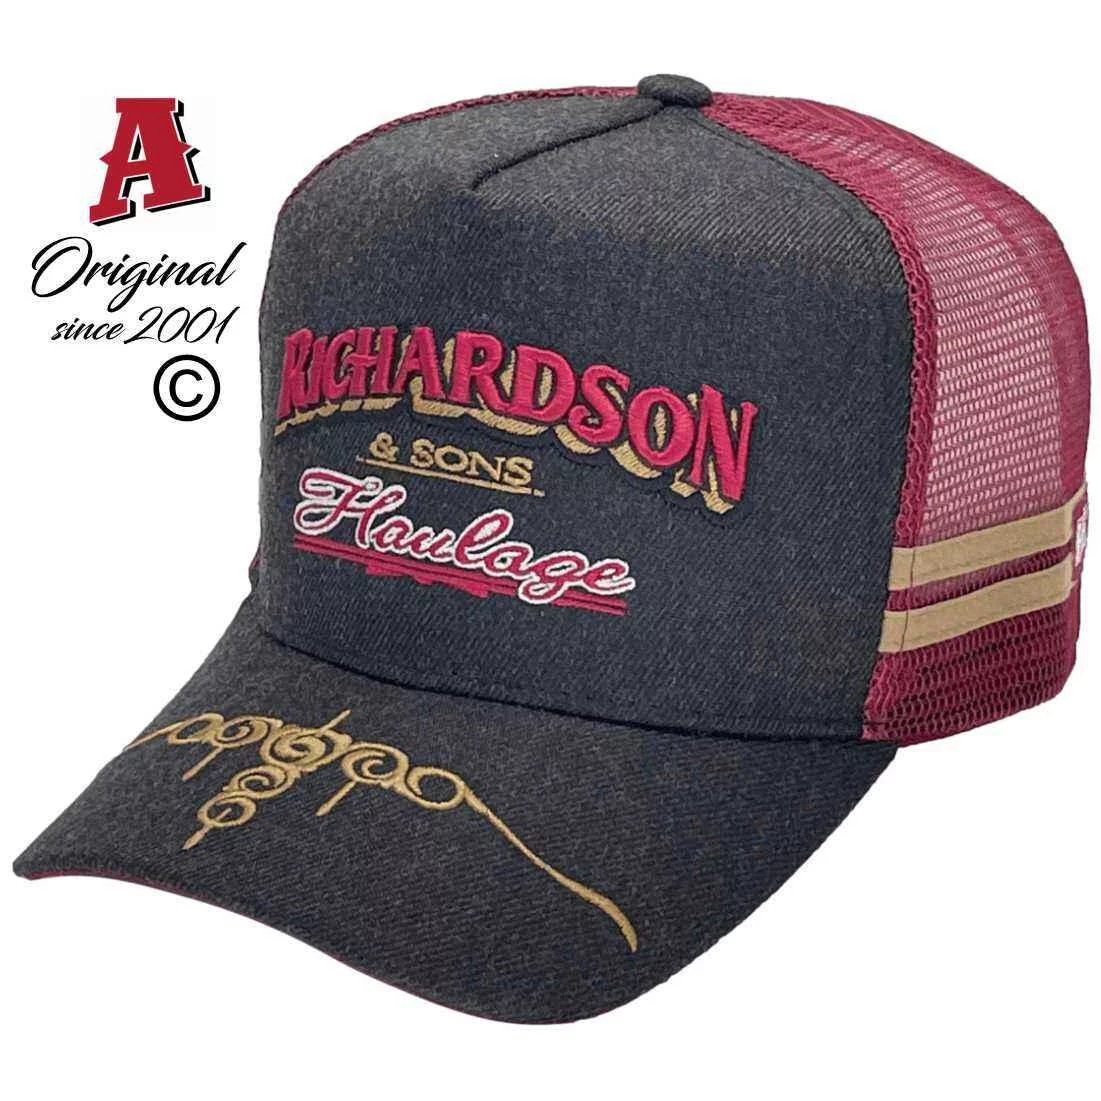 Richardson & Sons Haulage Henty NSW Power Aussie Trucker Hats with Double Side Bands & Australian HeadFit Crown Charcoal, Burgundy, Khaki,